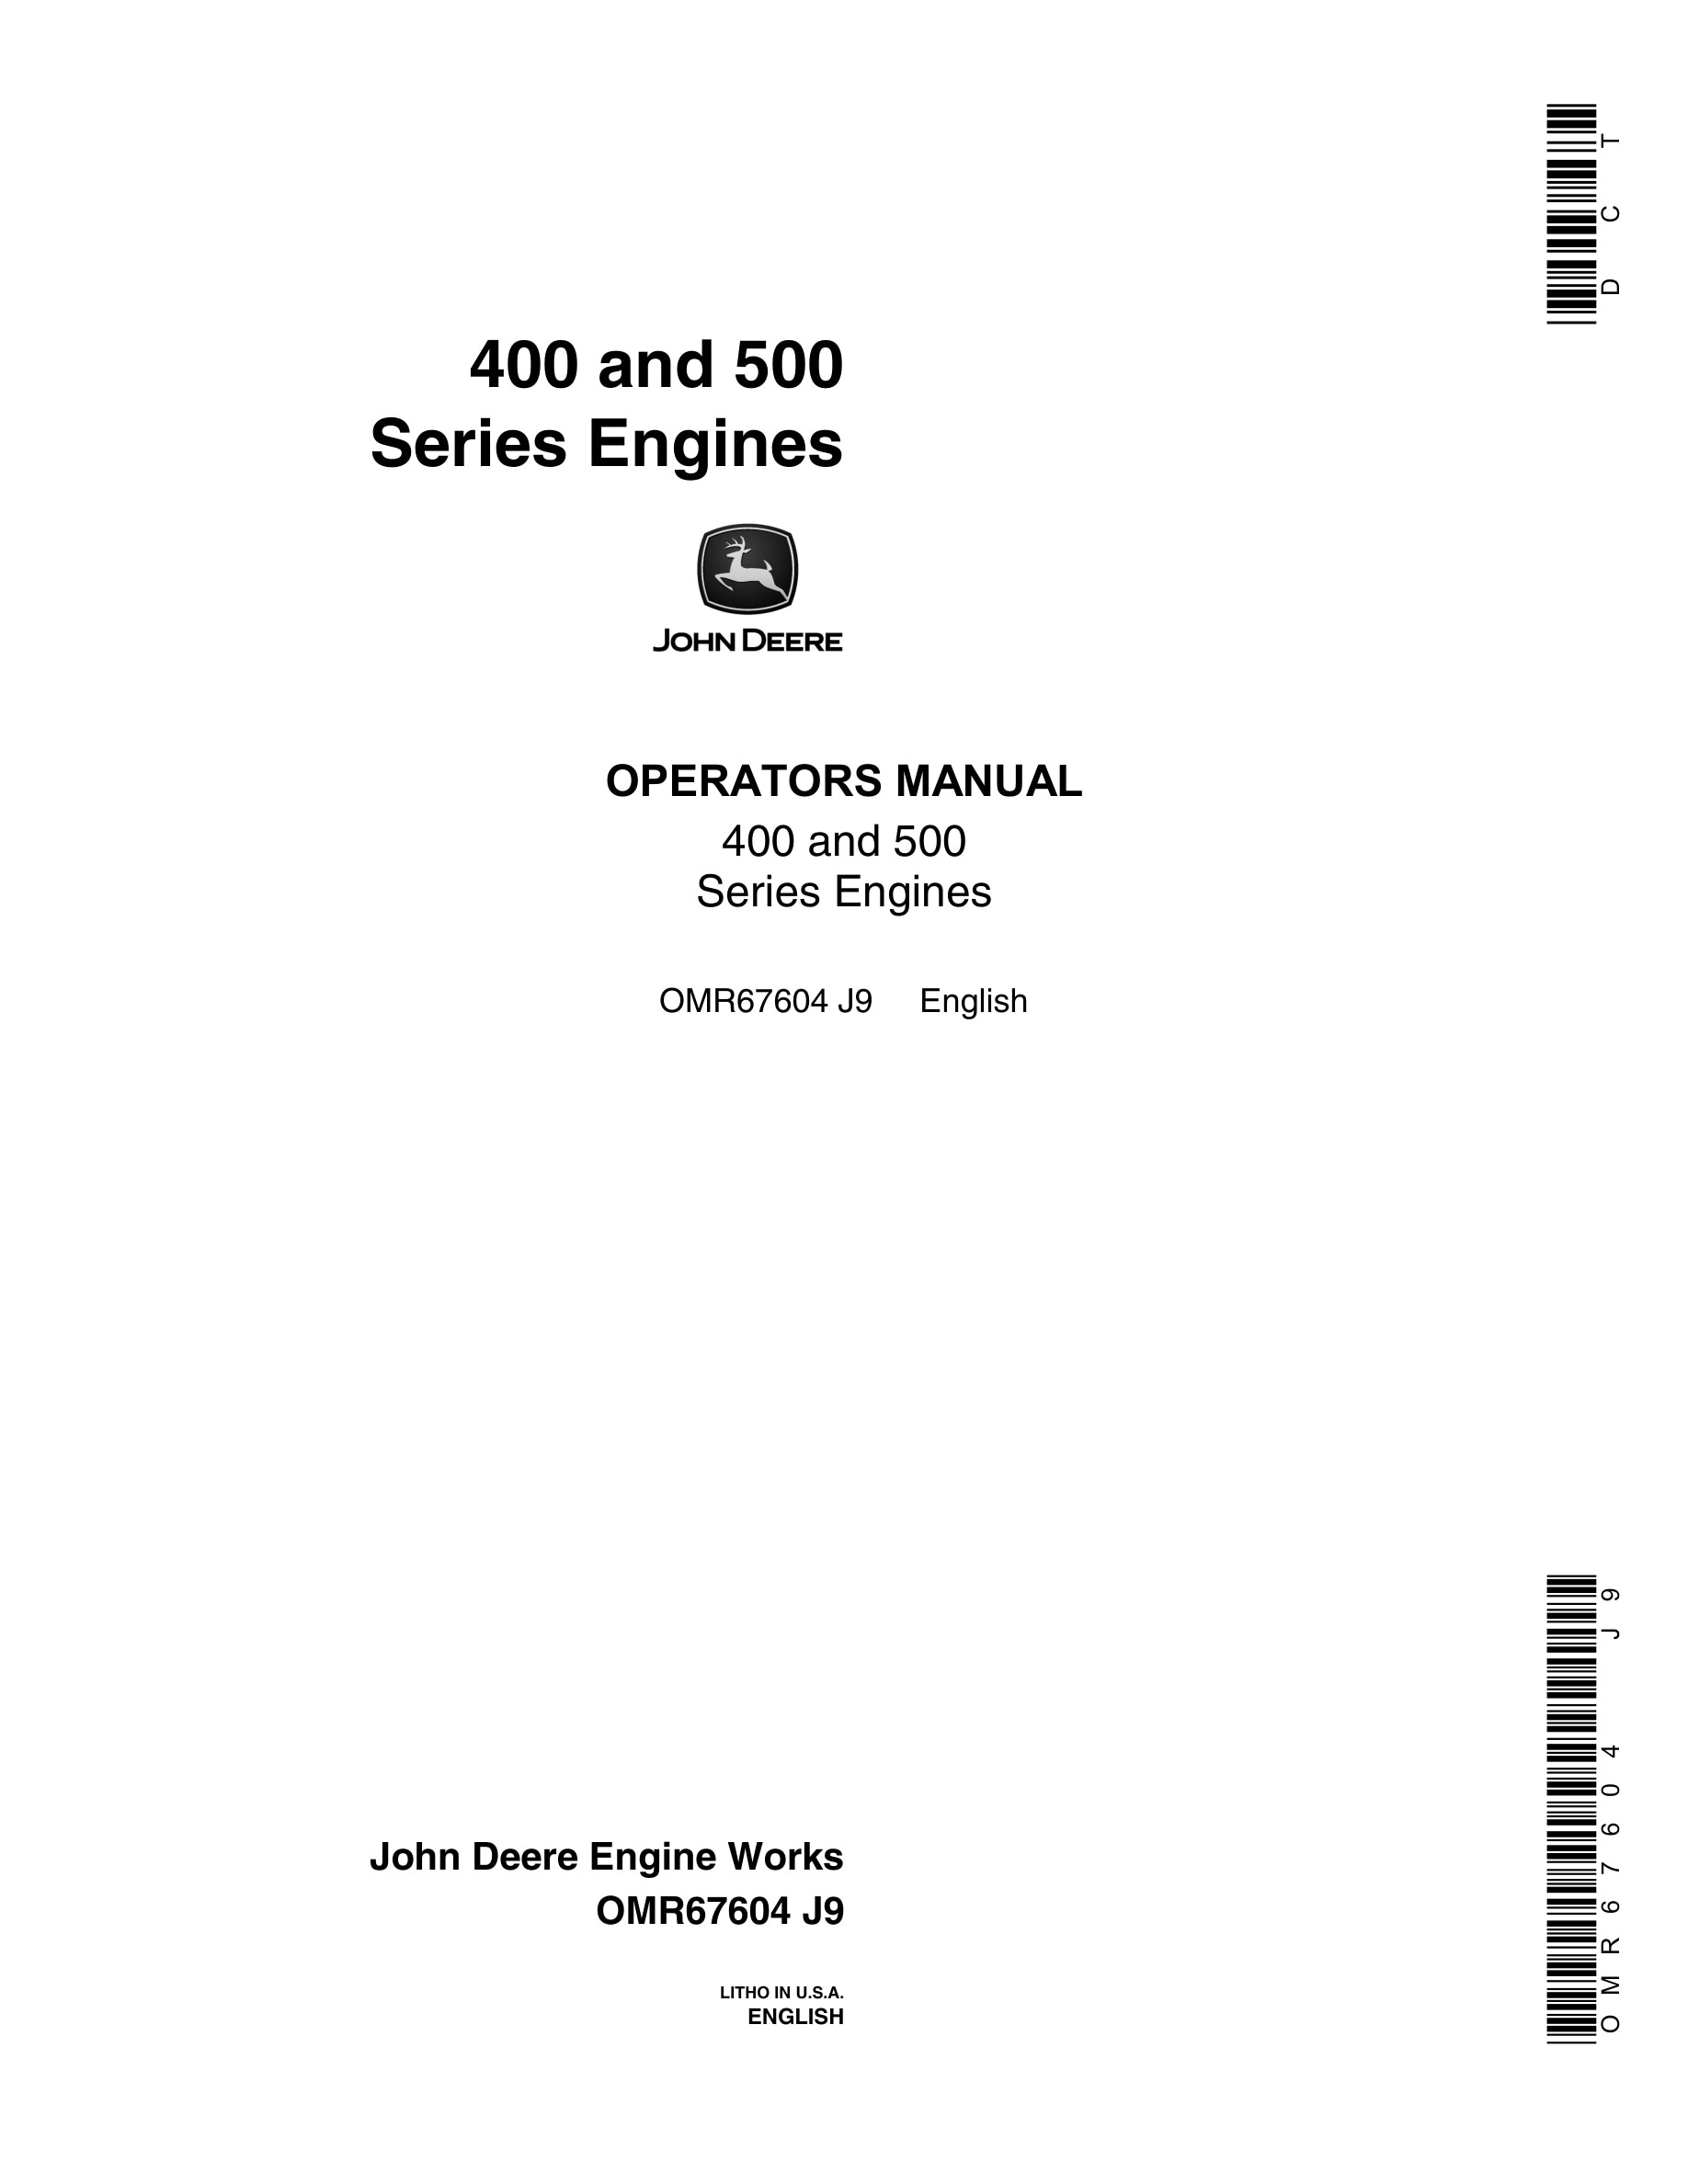 John Deere PowerTech 400 and 500 Series Engines Operator Manual OMR67604-1